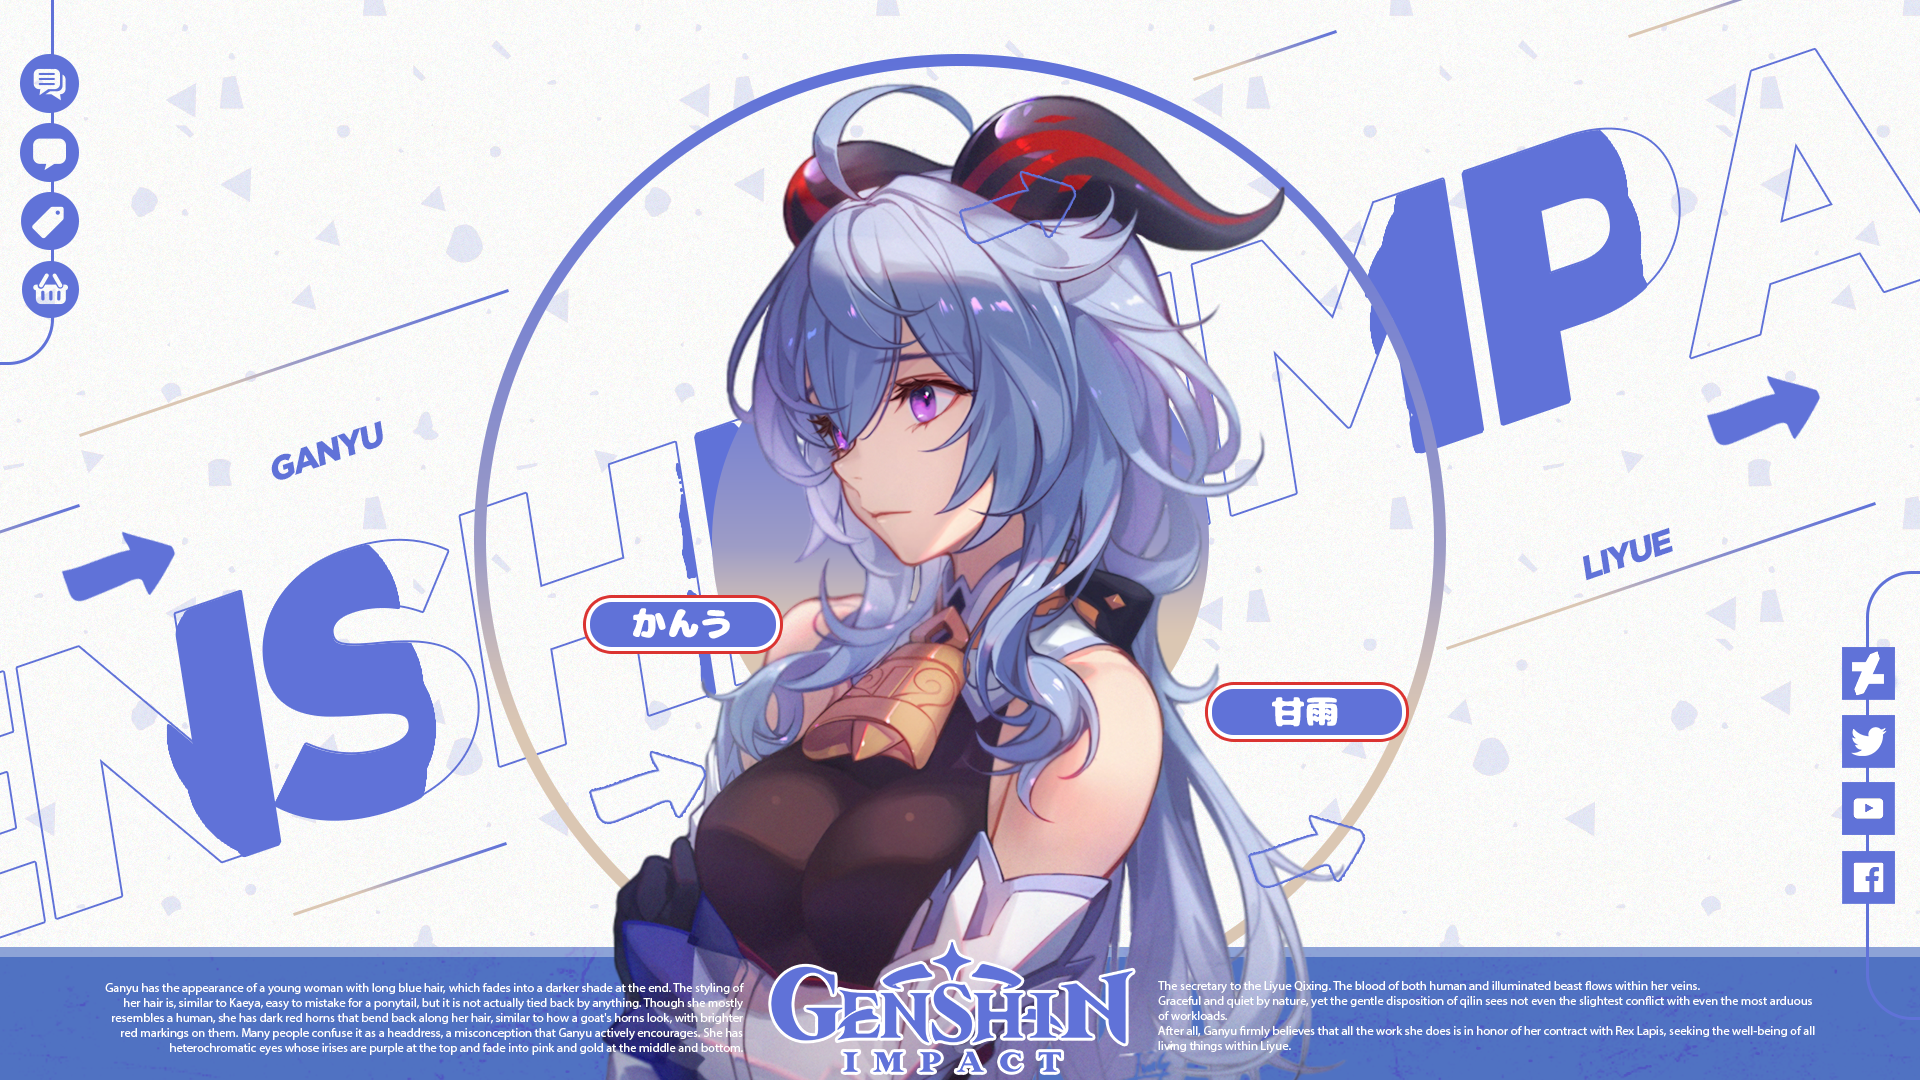 UME ] Genshin Impact HU TAO render 2 by SAYA-Team on DeviantArt